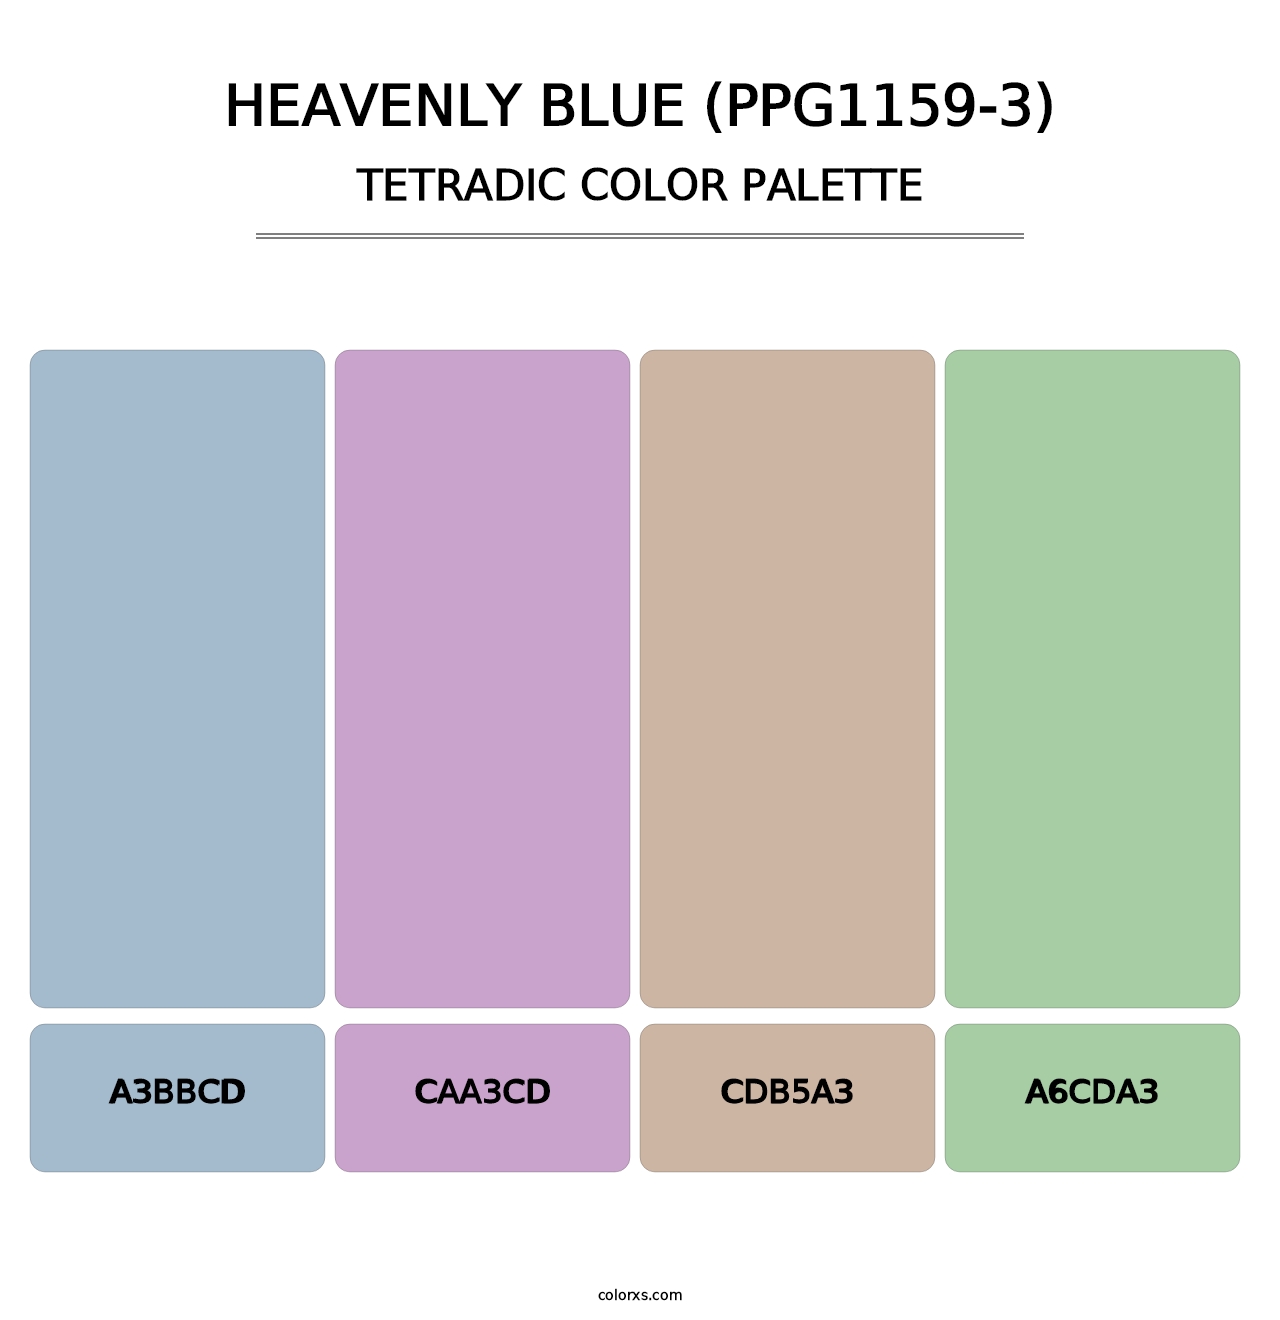 Heavenly Blue (PPG1159-3) - Tetradic Color Palette